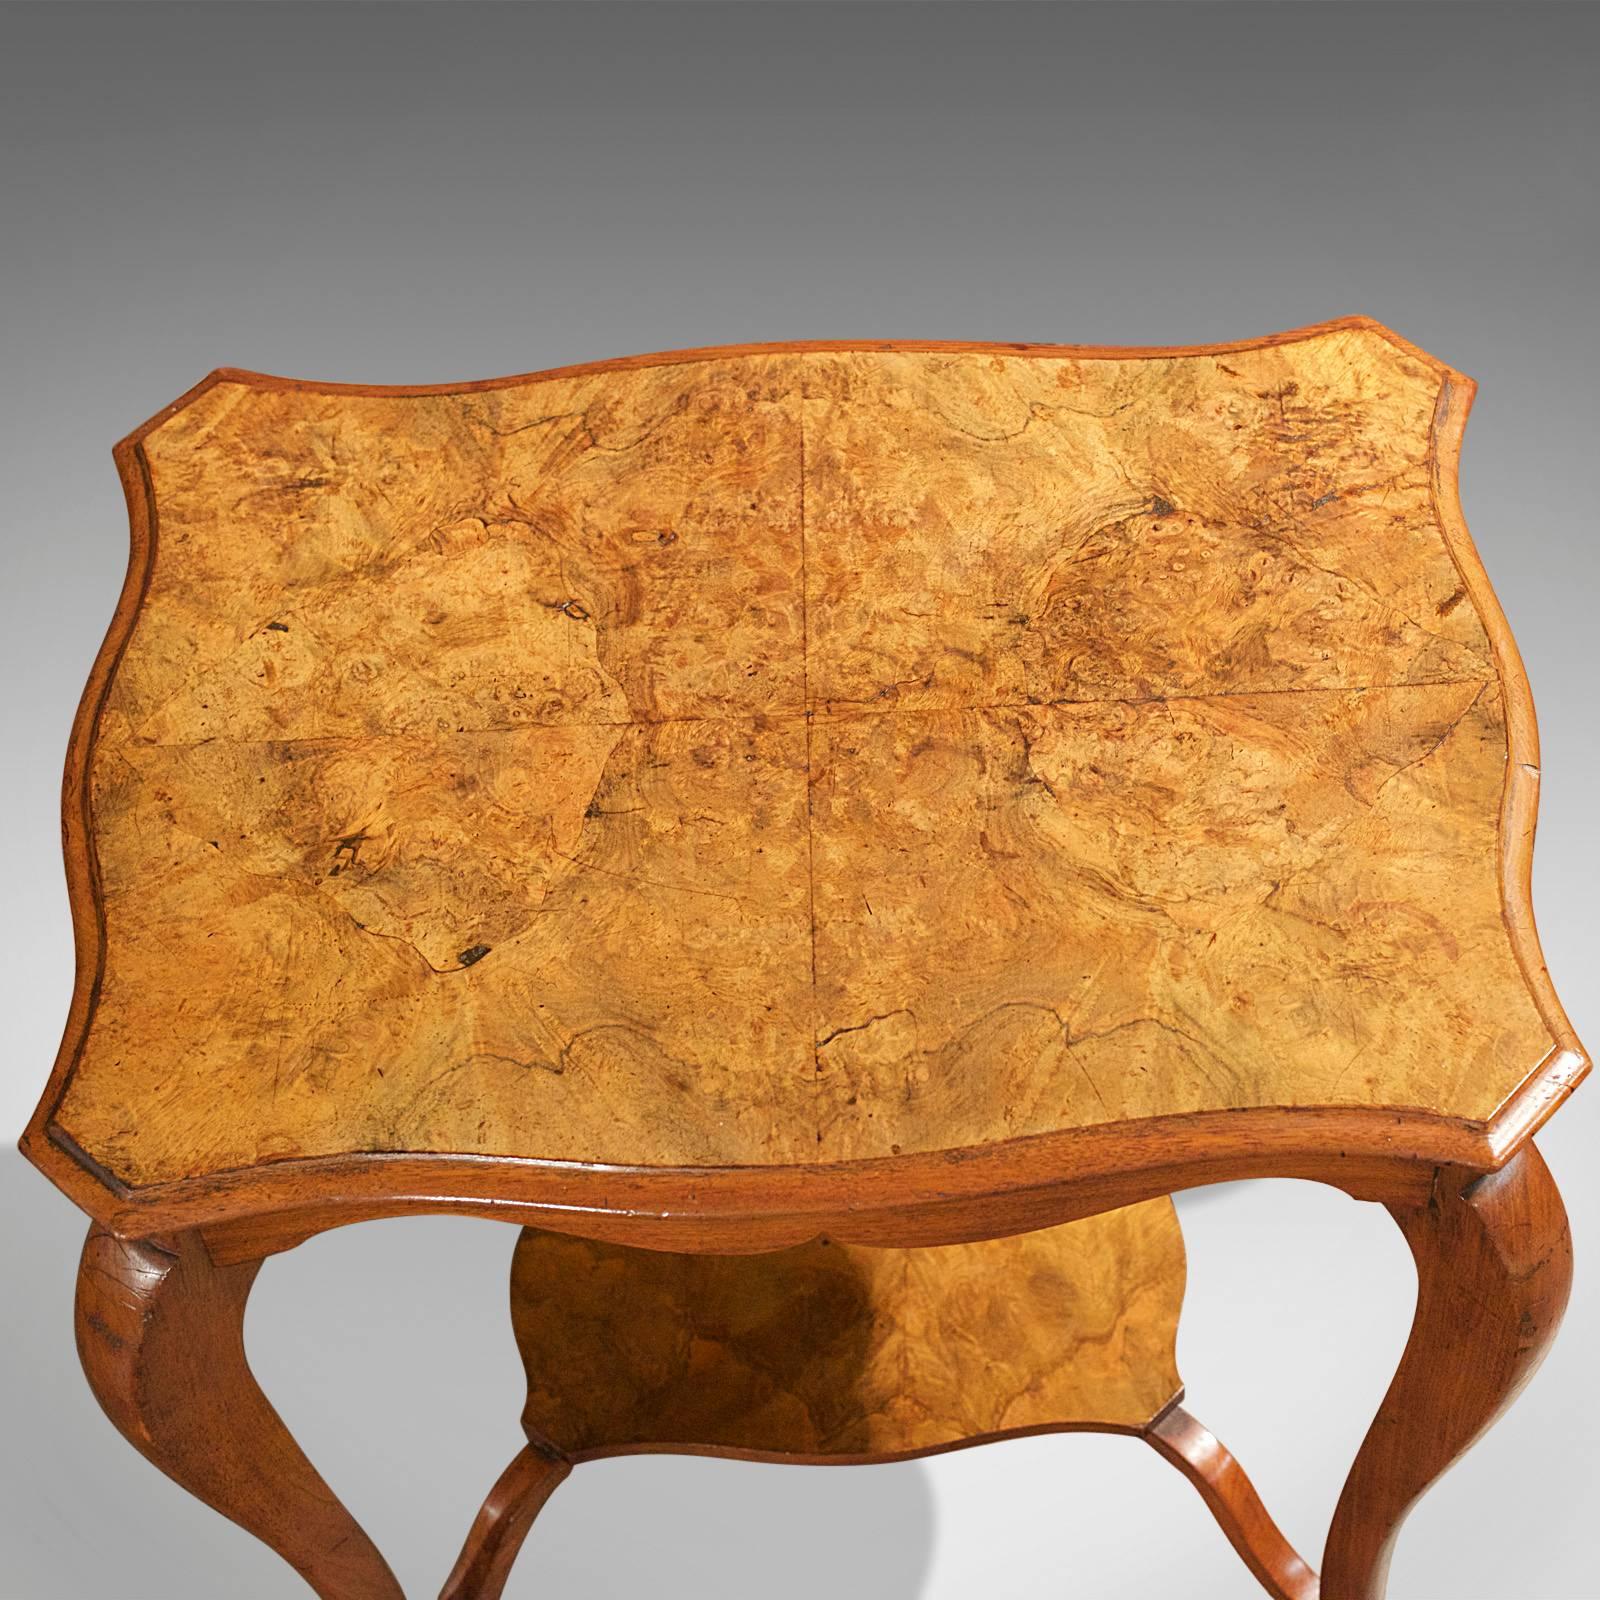 19th Century Antique English Burr Walnut Two-Tier Side Table, circa 1900